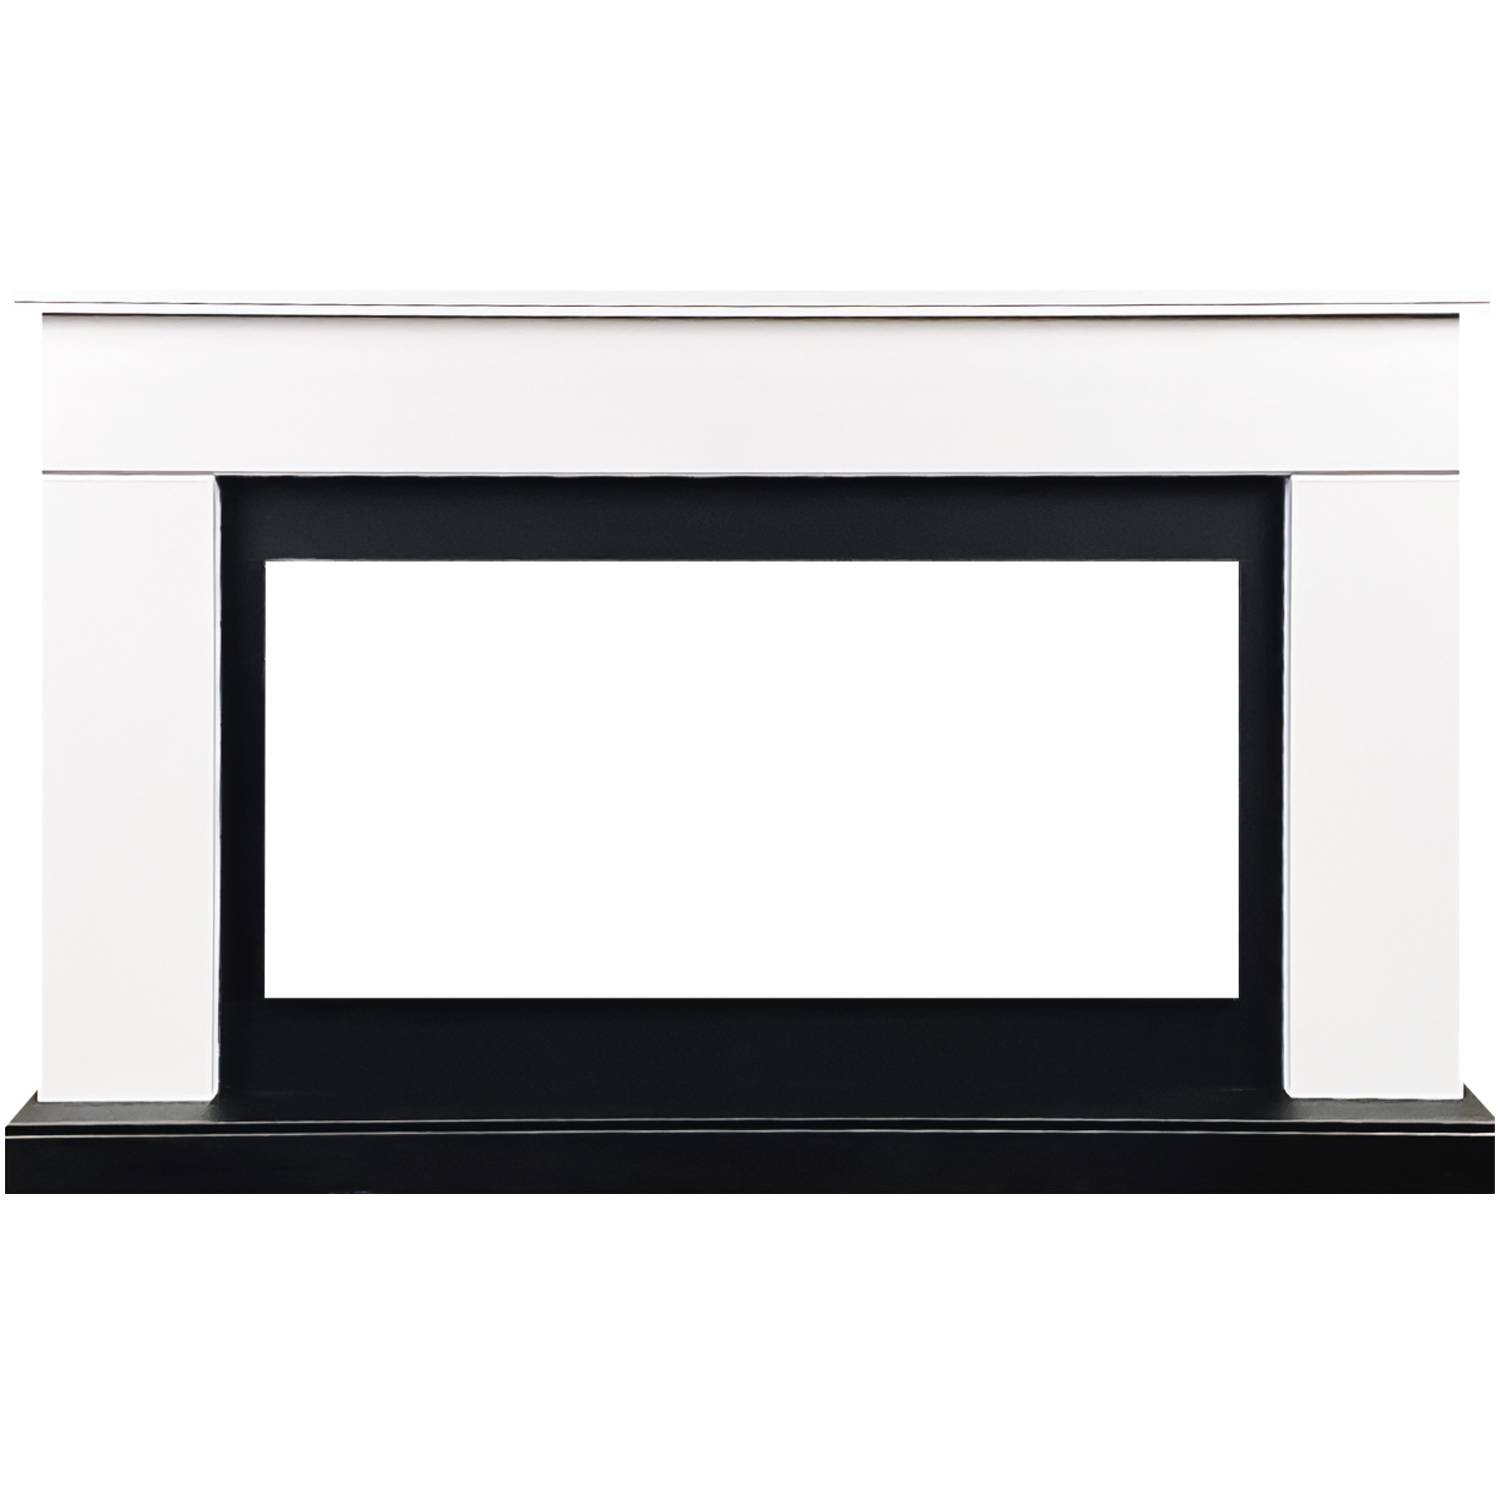 портал royal flame soho белый с черным Портал Royal Flame Bergen (Разборный) - Белый с черным (Ширина 1370 мм)